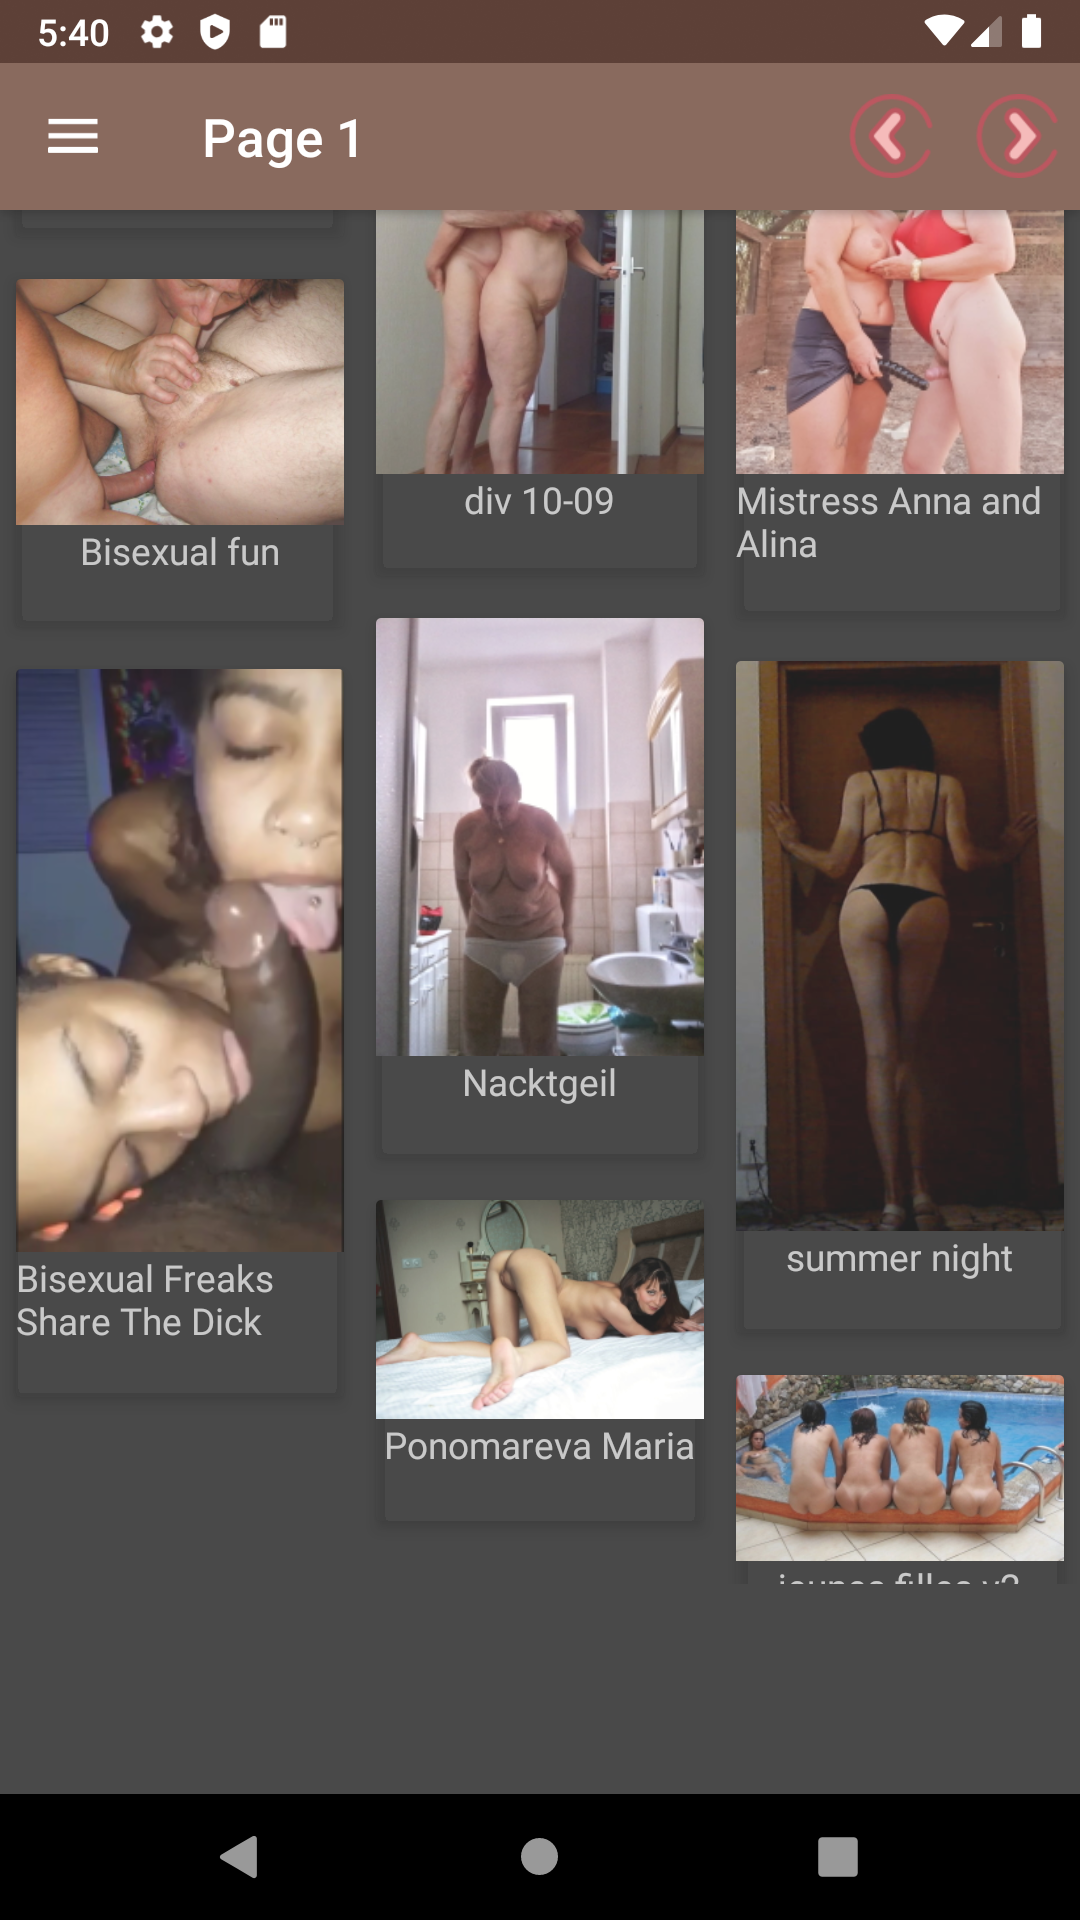 Bisexual Sex apk,star,app,pornstars,hot,pucs,pictures,editor,sexy,pics,hentie,porn,galleries,hentai,anime,hotmilfpics,pic,gallery